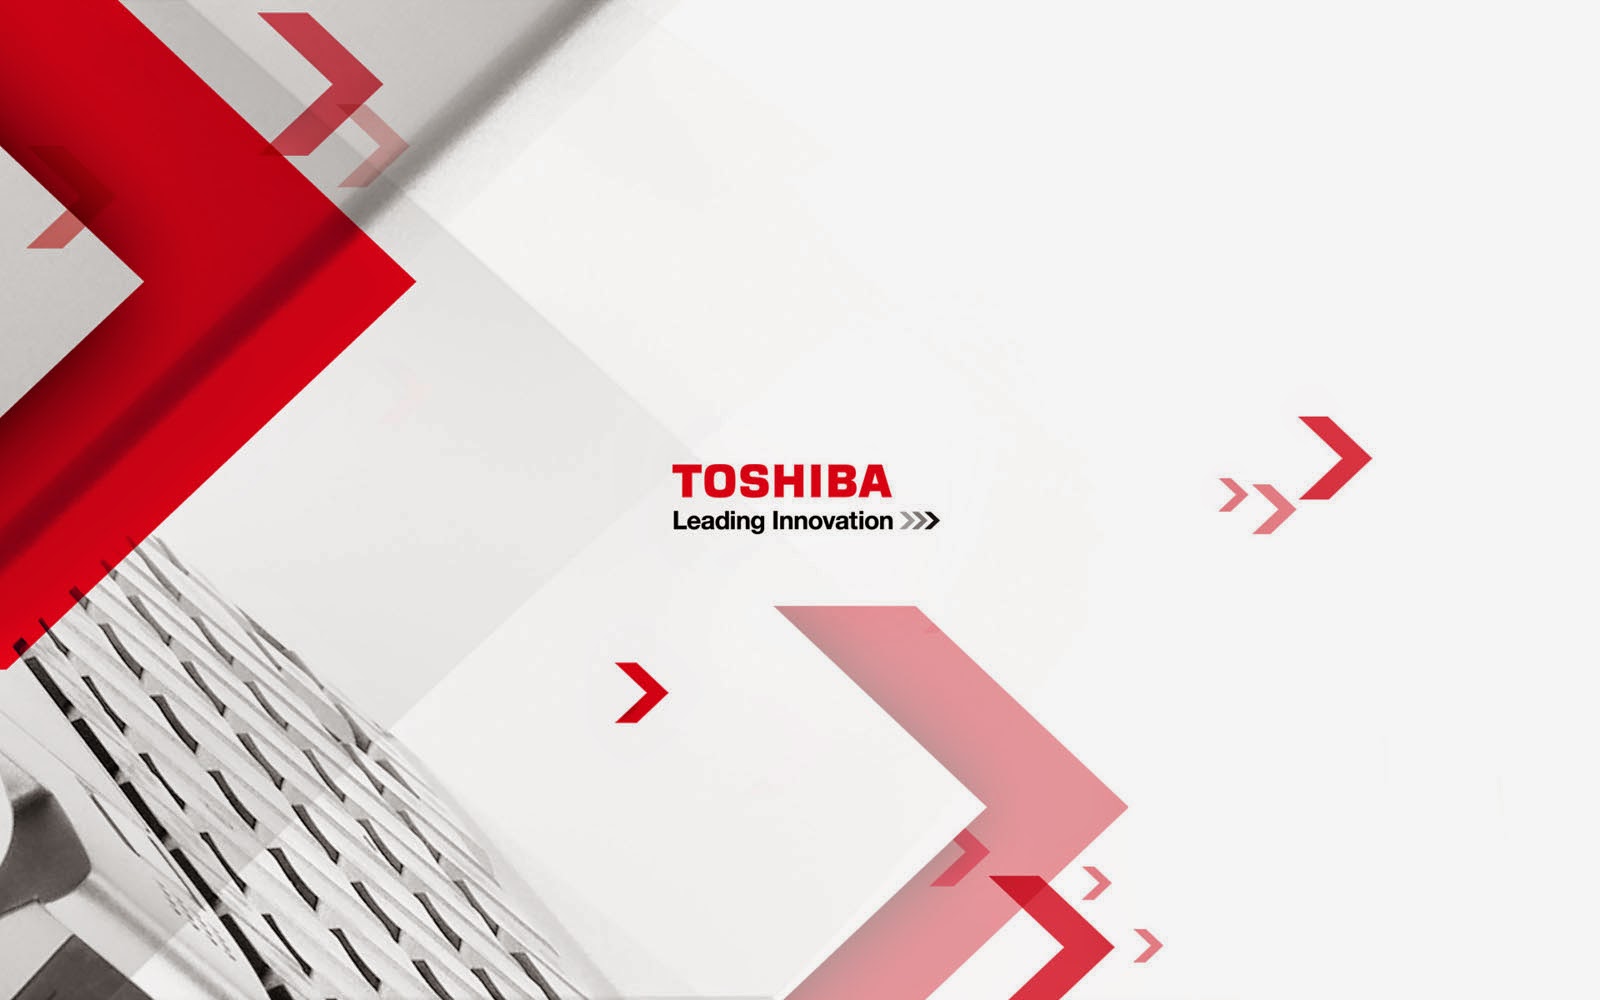 Wallpapers Toshiba Backgrounds